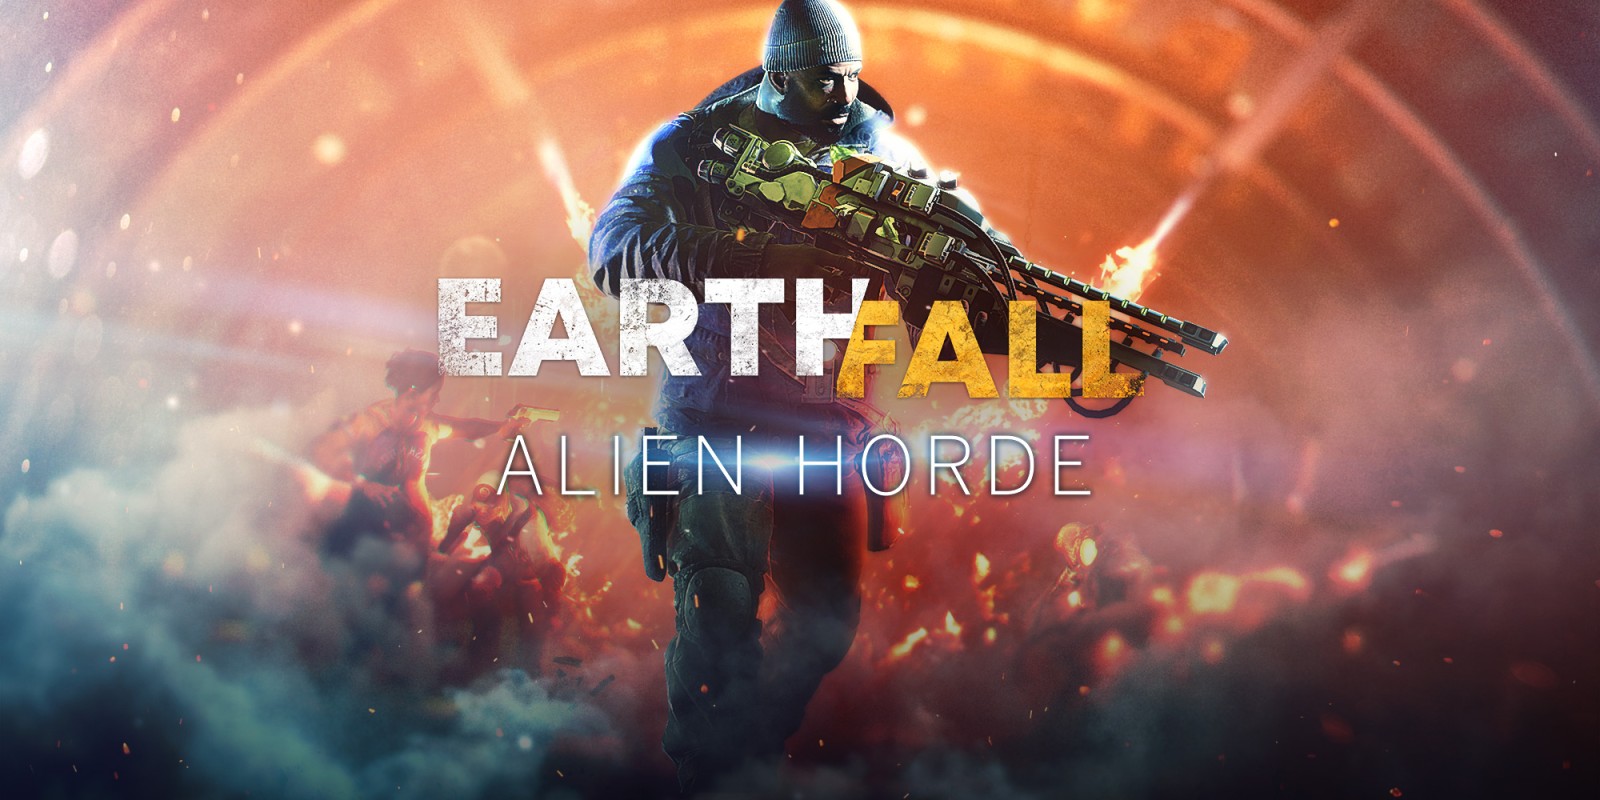 earthfall alien horde